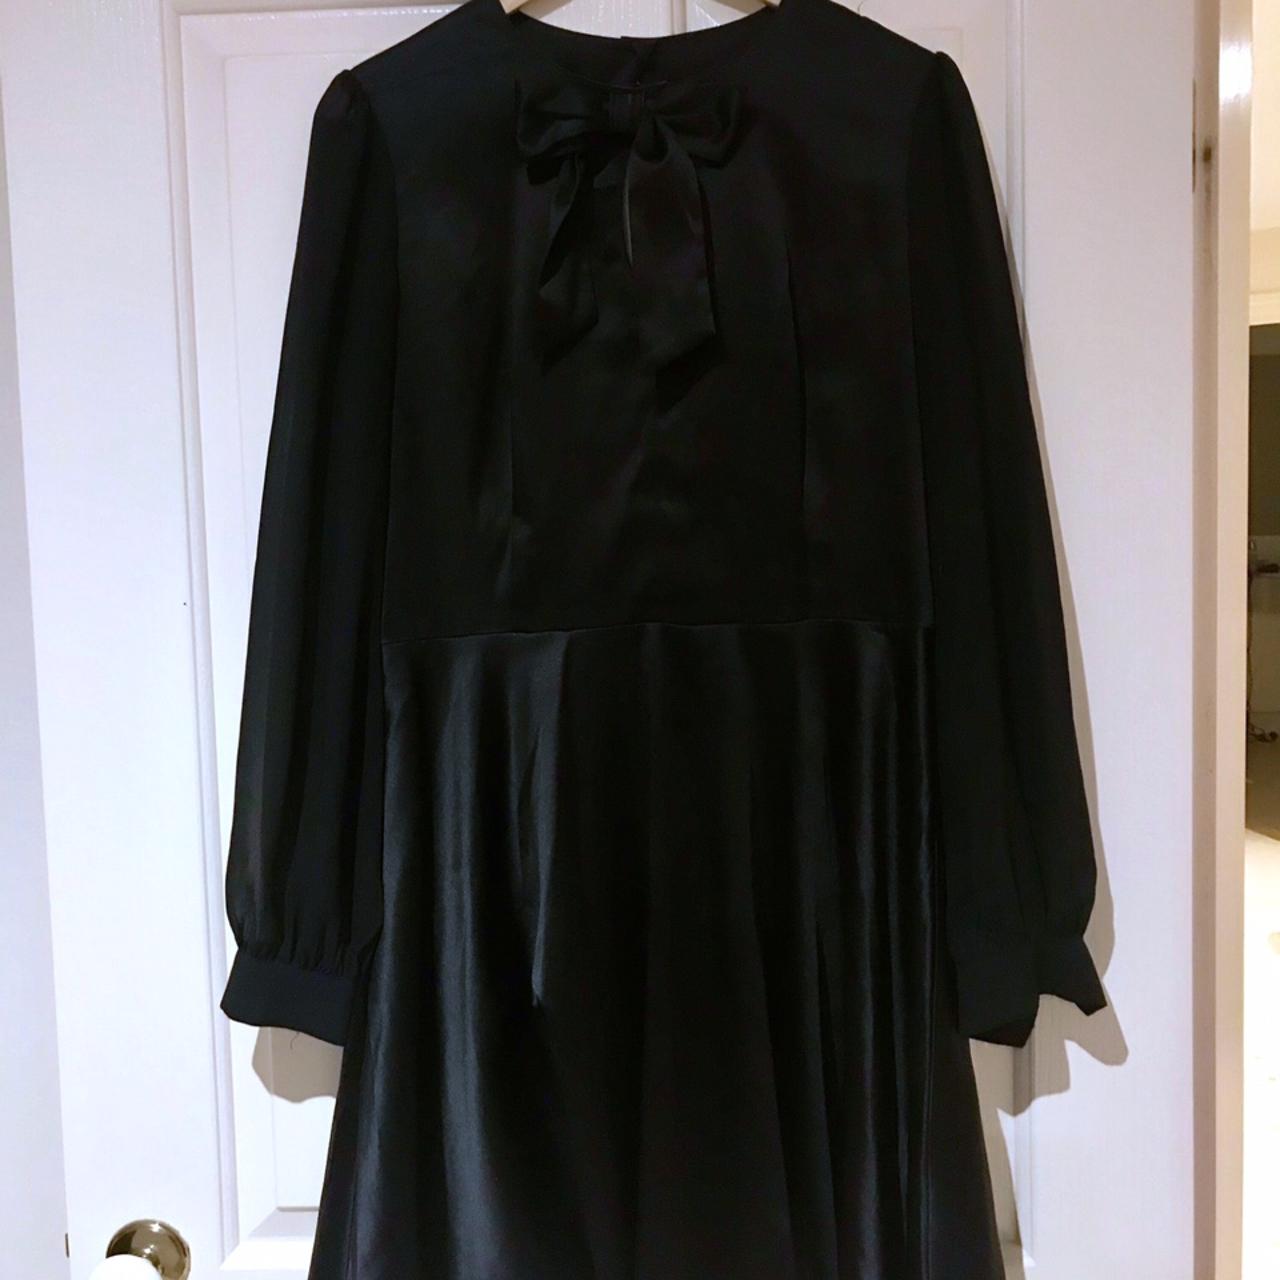 BLACK LONGSLEEVE SATIN DRESS worn once, size... - Depop